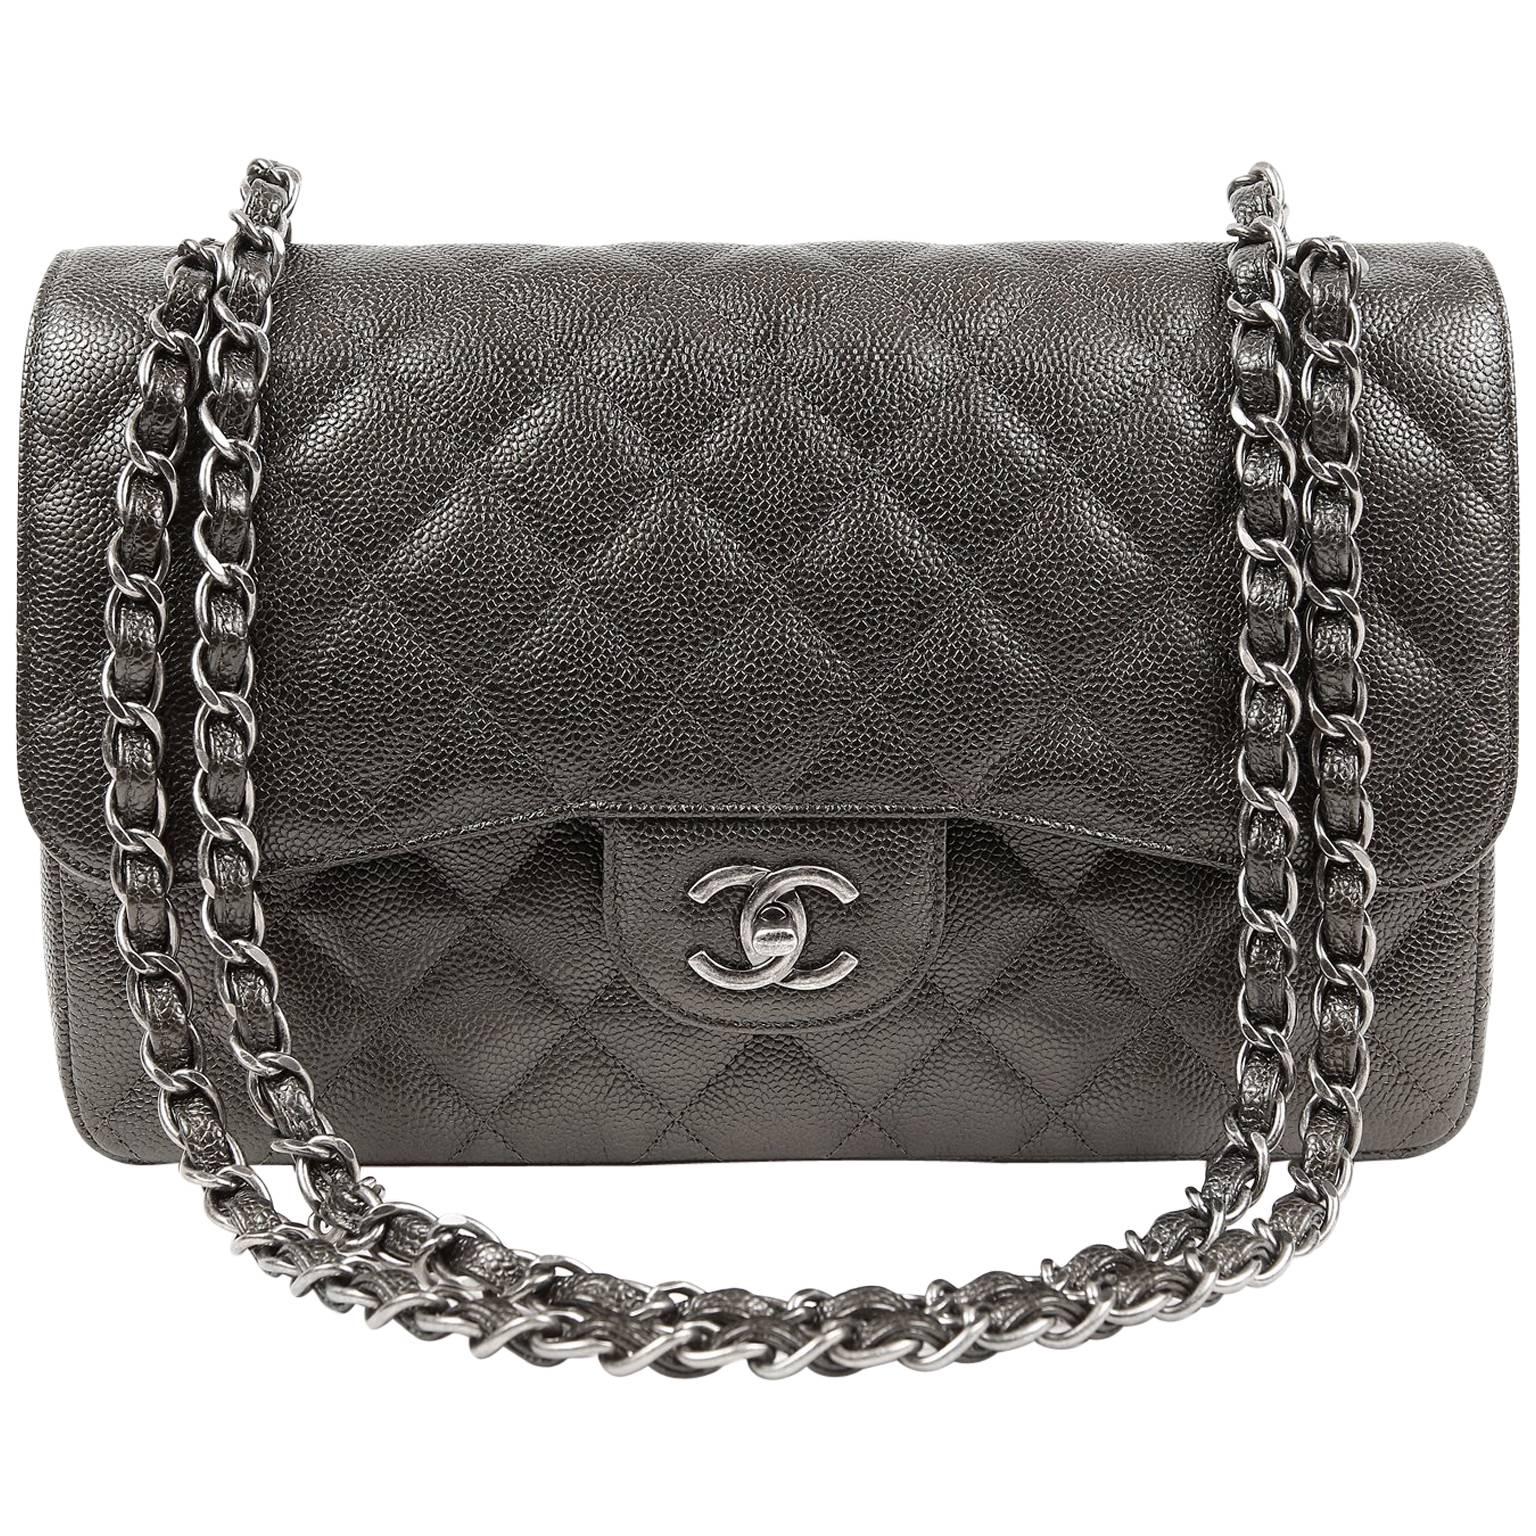 Chanel Graphite Caviar Jumbo Double Flap Classic Bag